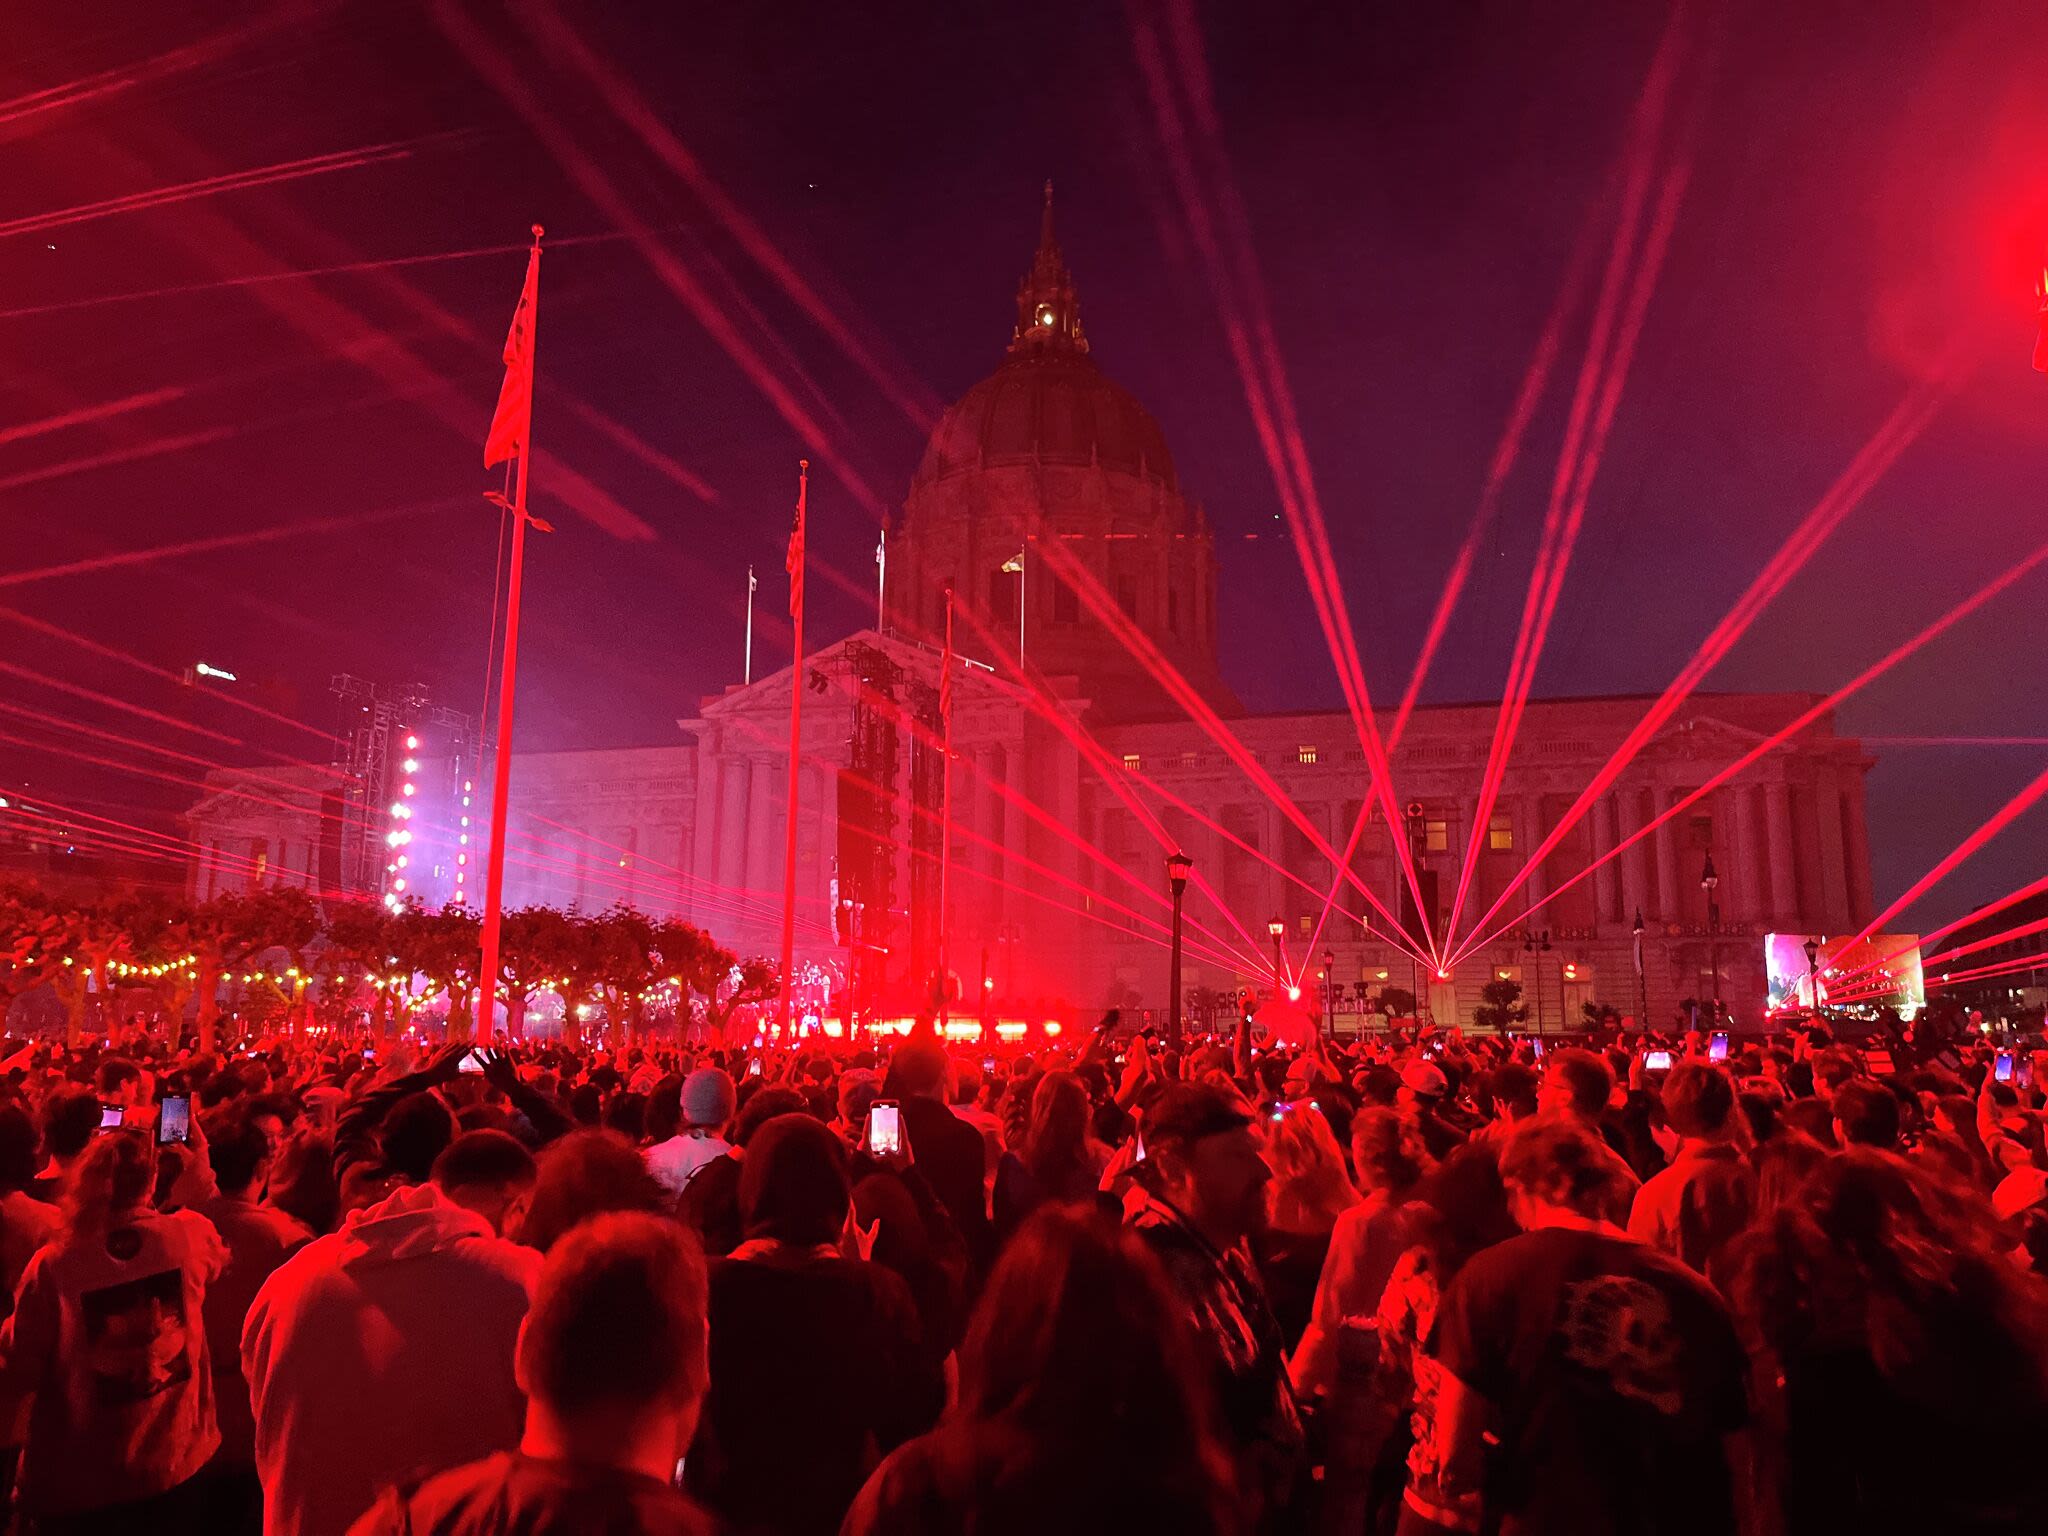 SF wins big with massive 25,000-person Civic Center rave